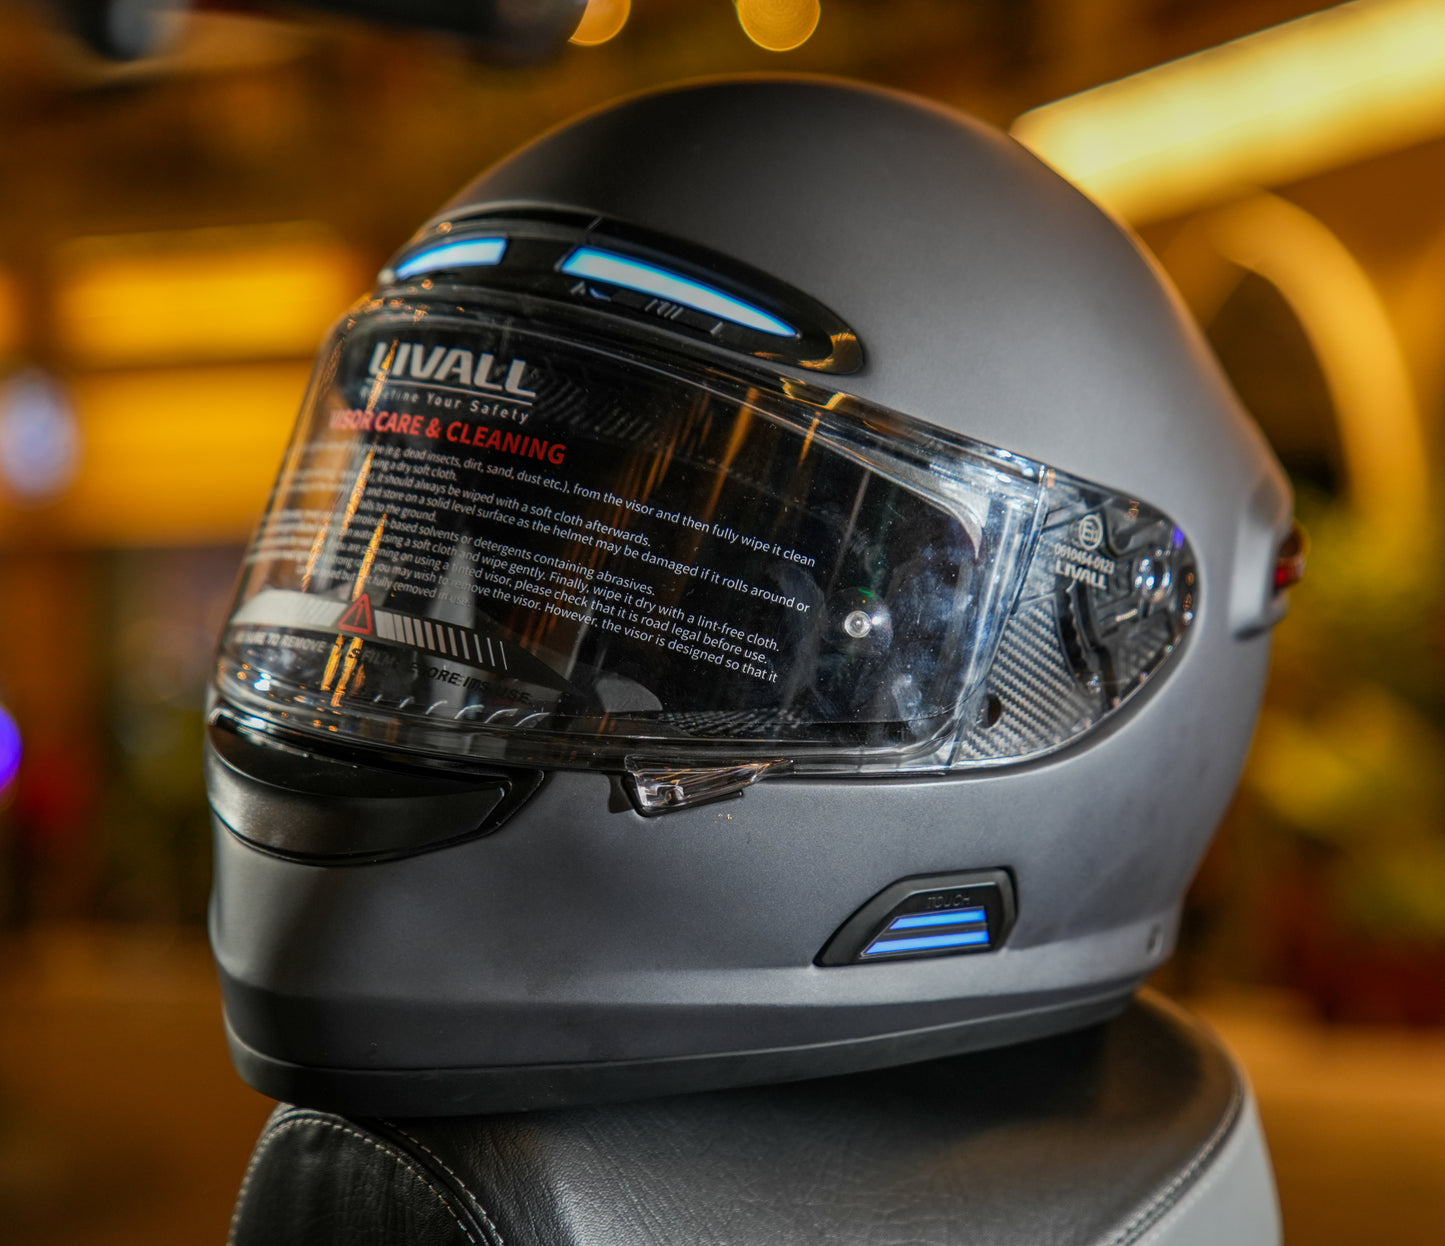 Livall MC1 Smart Motorcycle Helmet